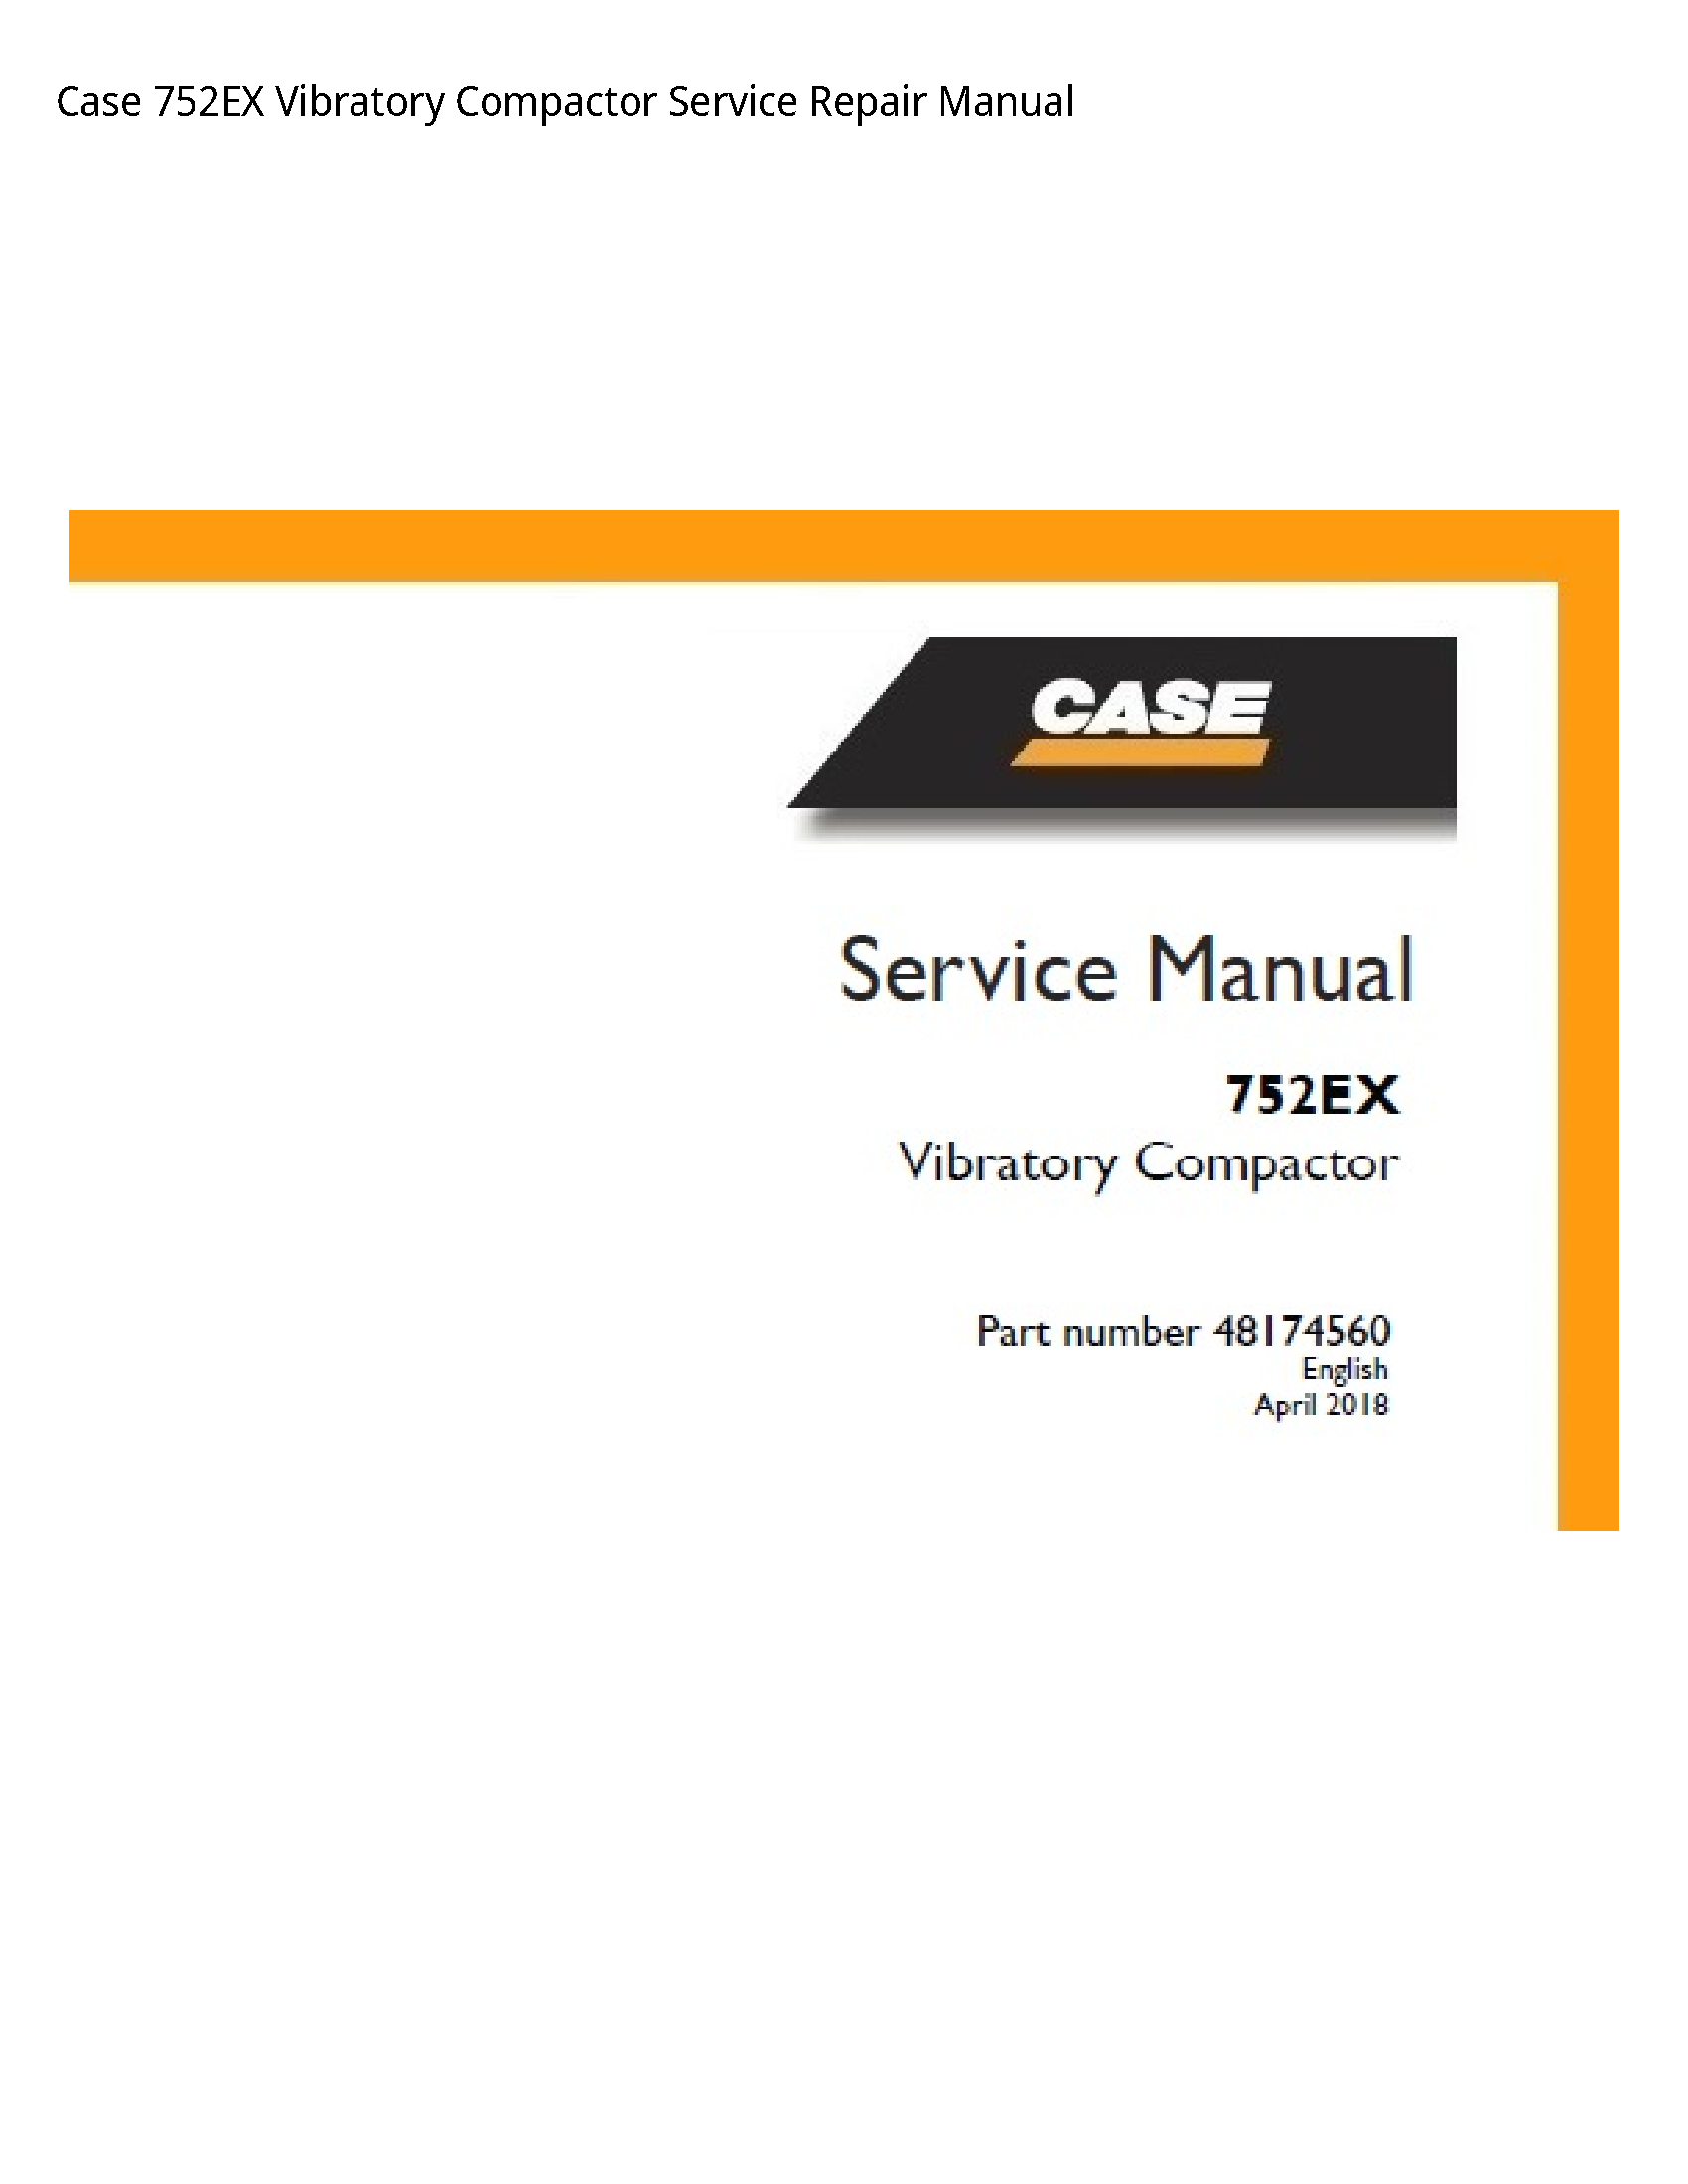 Case/Case IH 752EX Vibratory Compactor manual